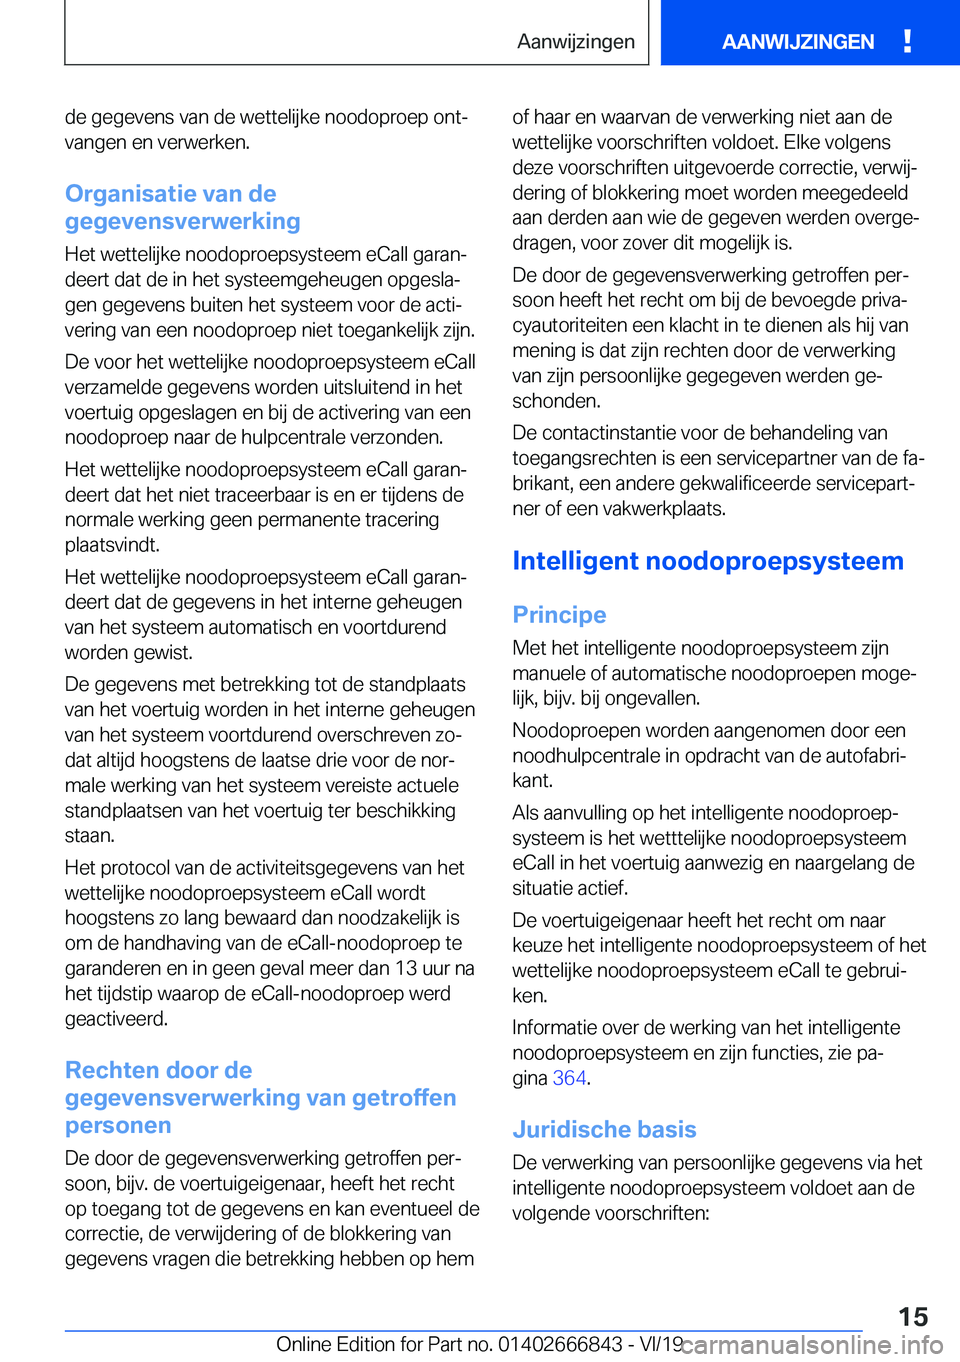 BMW X3 M 2020  Instructieboekjes (in Dutch) �d�e��g�e�g�e�v�e�n�s��v�a�n��d�e��w�e�t�t�e�l�i�j�k�e��n�o�o�d�o�p�r�o�e�p��o�n�tj�v�a�n�g�e�n��e�n��v�e�r�w�e�r�k�e�n�.
�O�r�g�a�n�i�s�a�t�i�e��v�a�n��d�e
�g�e�g�e�v�e�n�s�v�e�r�w�e�r�k�i